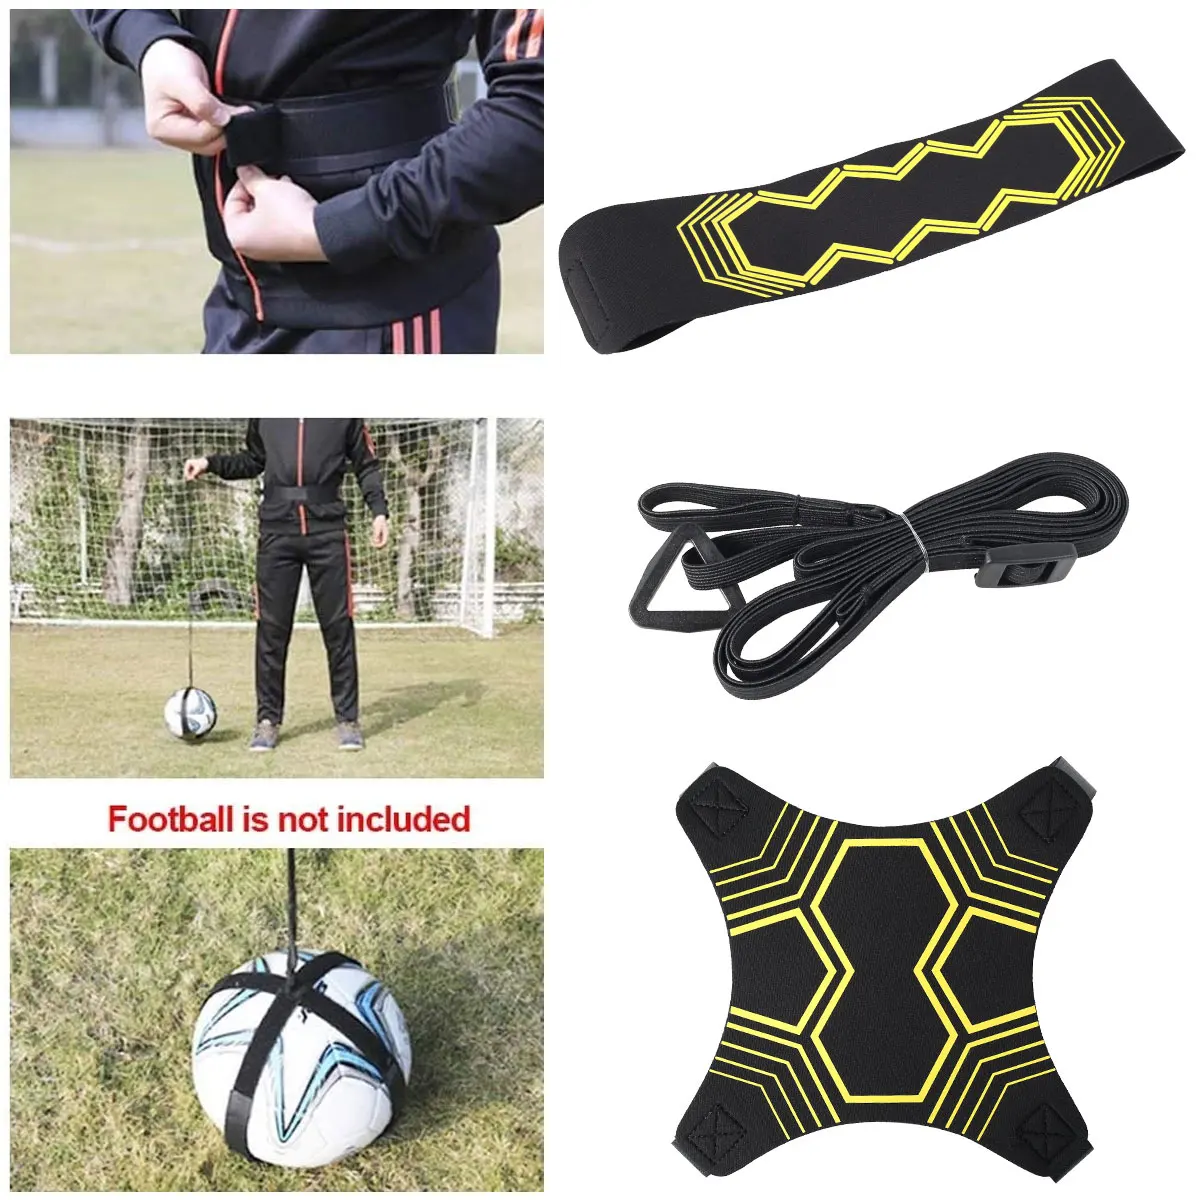 Soccer Ball Juggle Bags Children Auxiliary Circling Belt Kids Football Training Equipment Kick Solo Soccer Trainer Football Kick